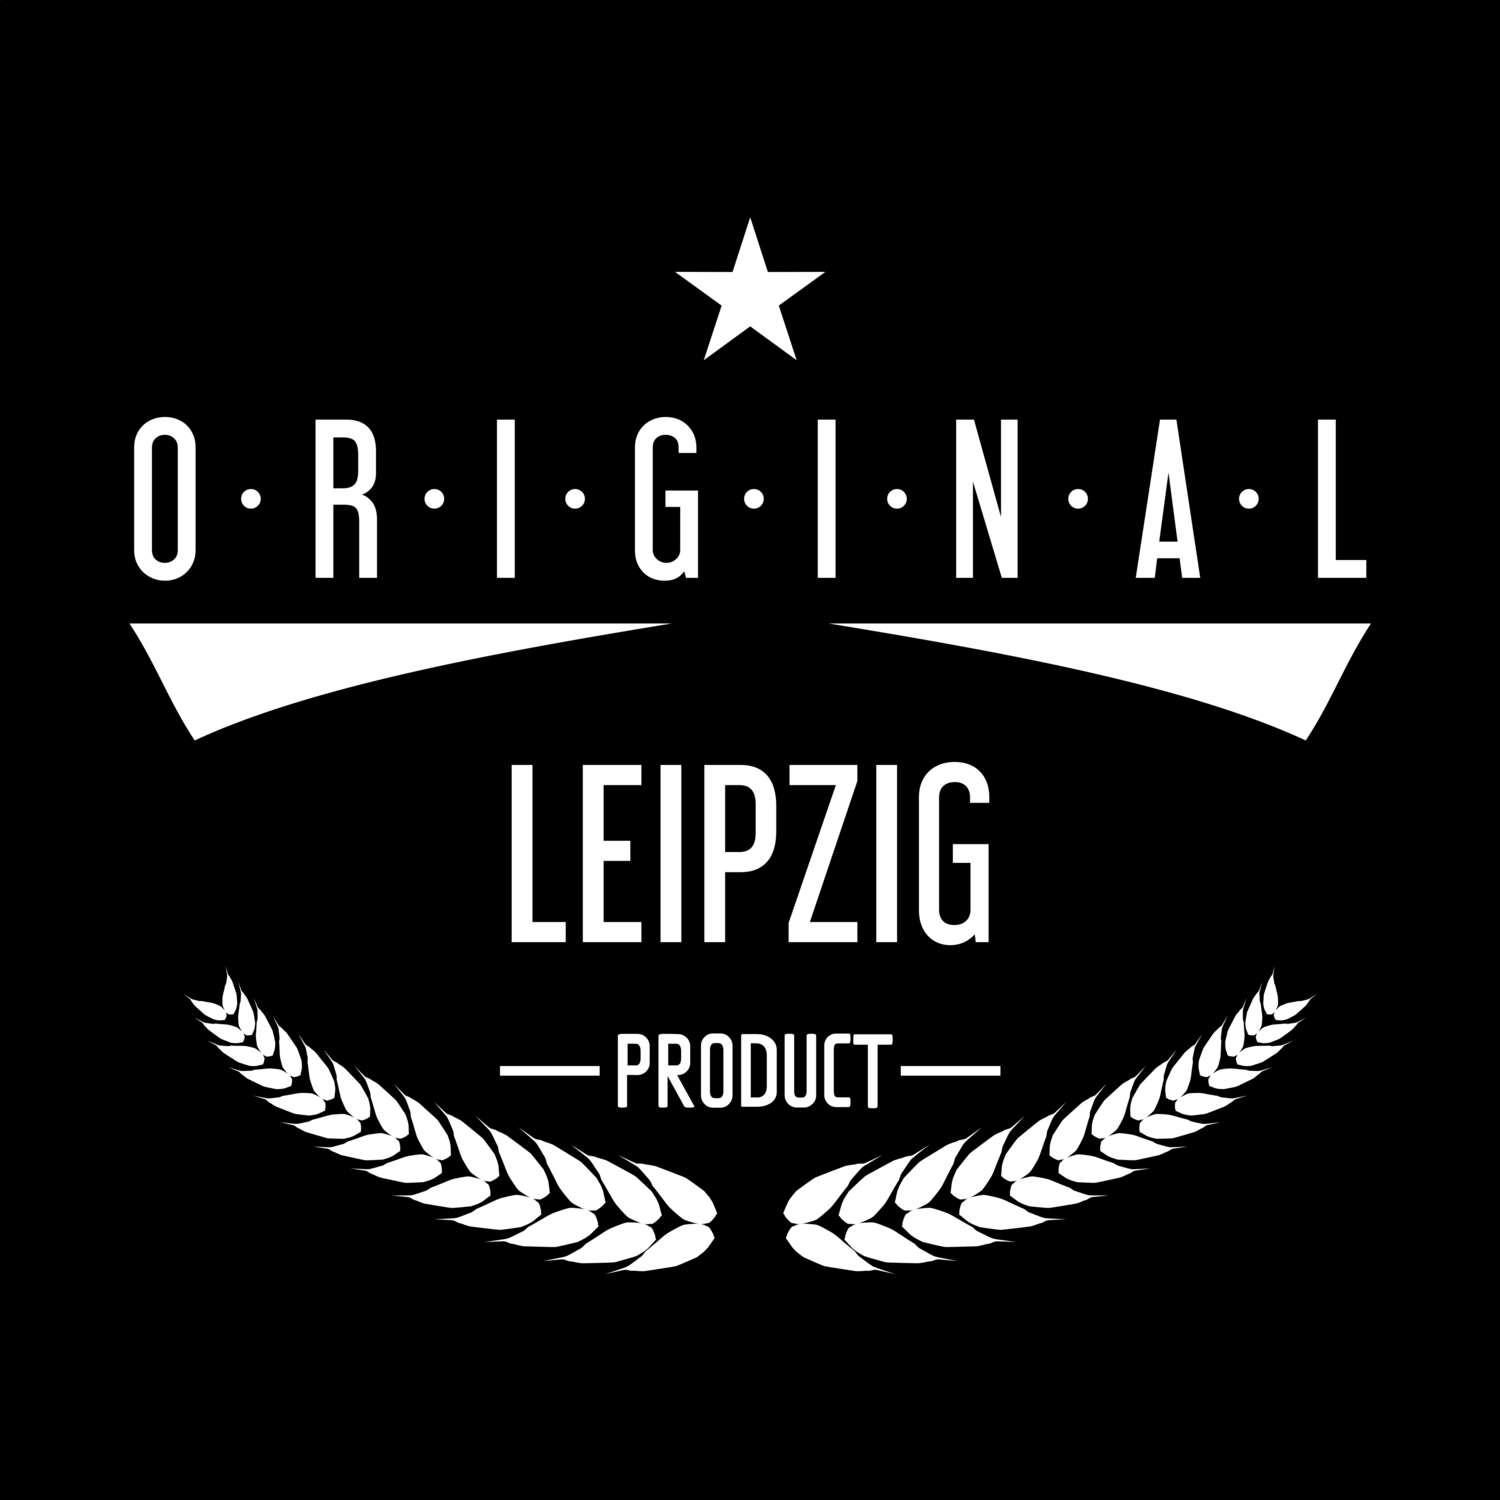 Leipzig T-Shirt »Original Product«